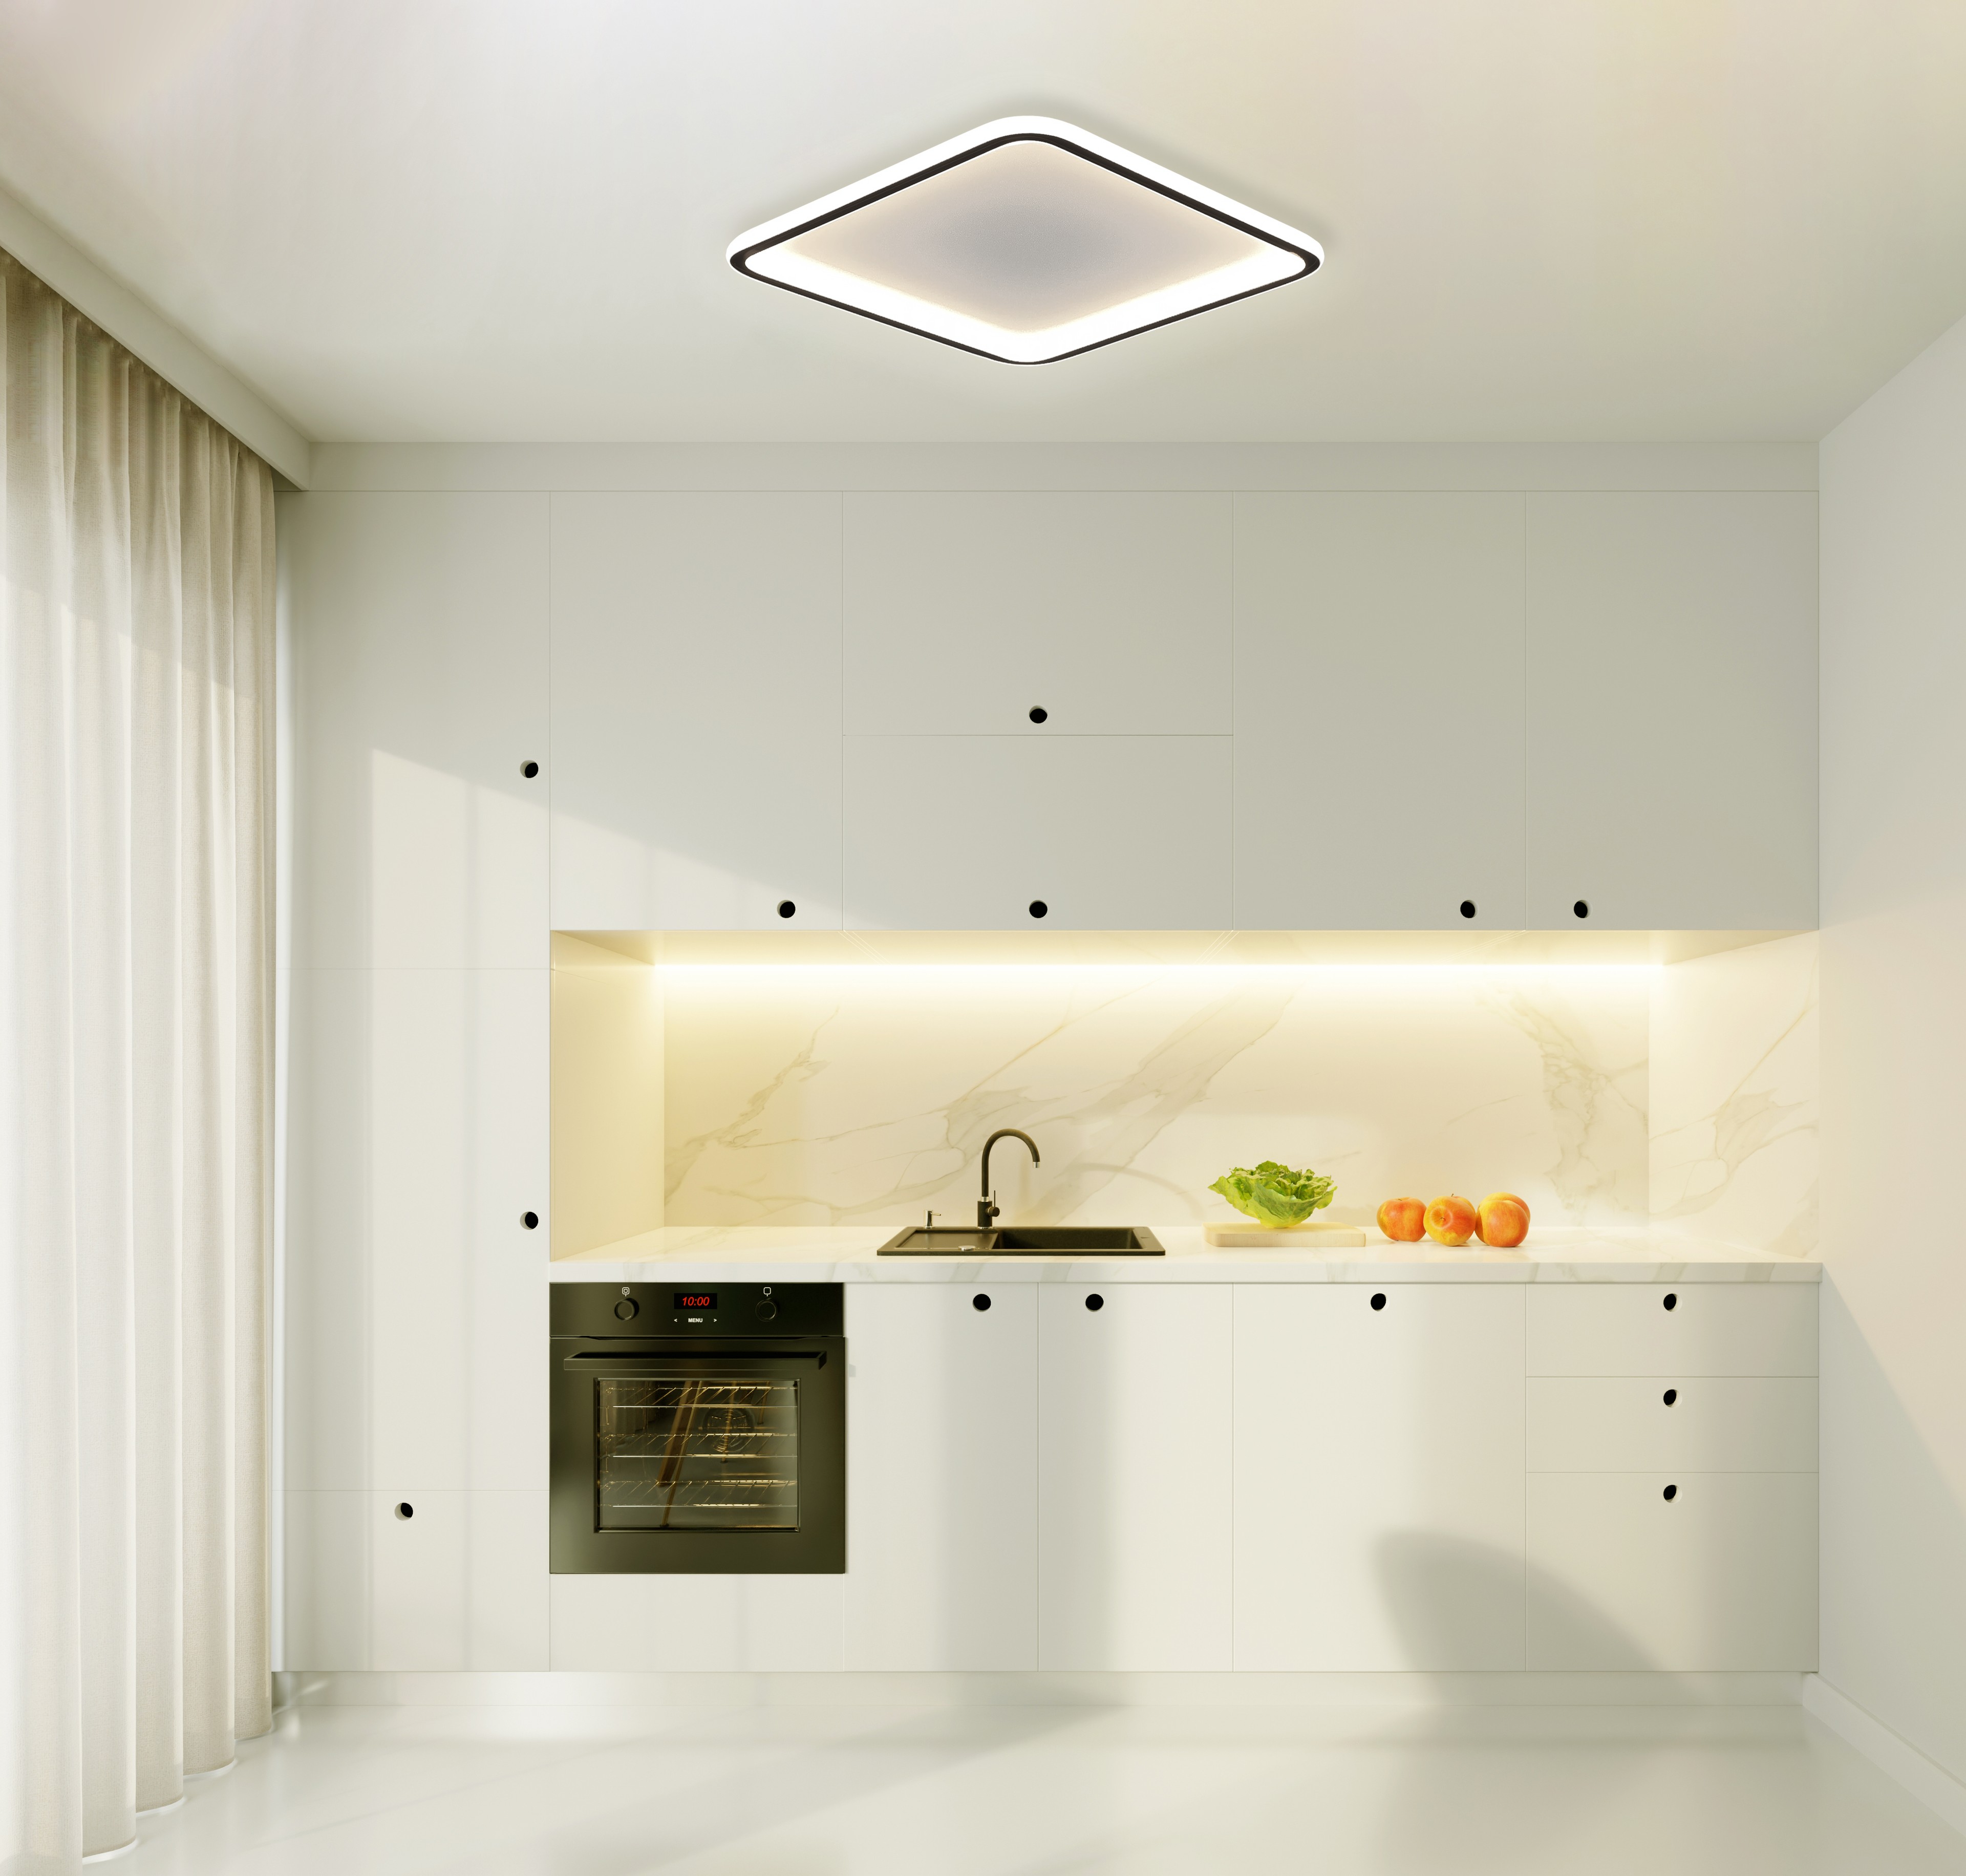 BASIS LED Ceiling Light TRA54101 60*60cm 